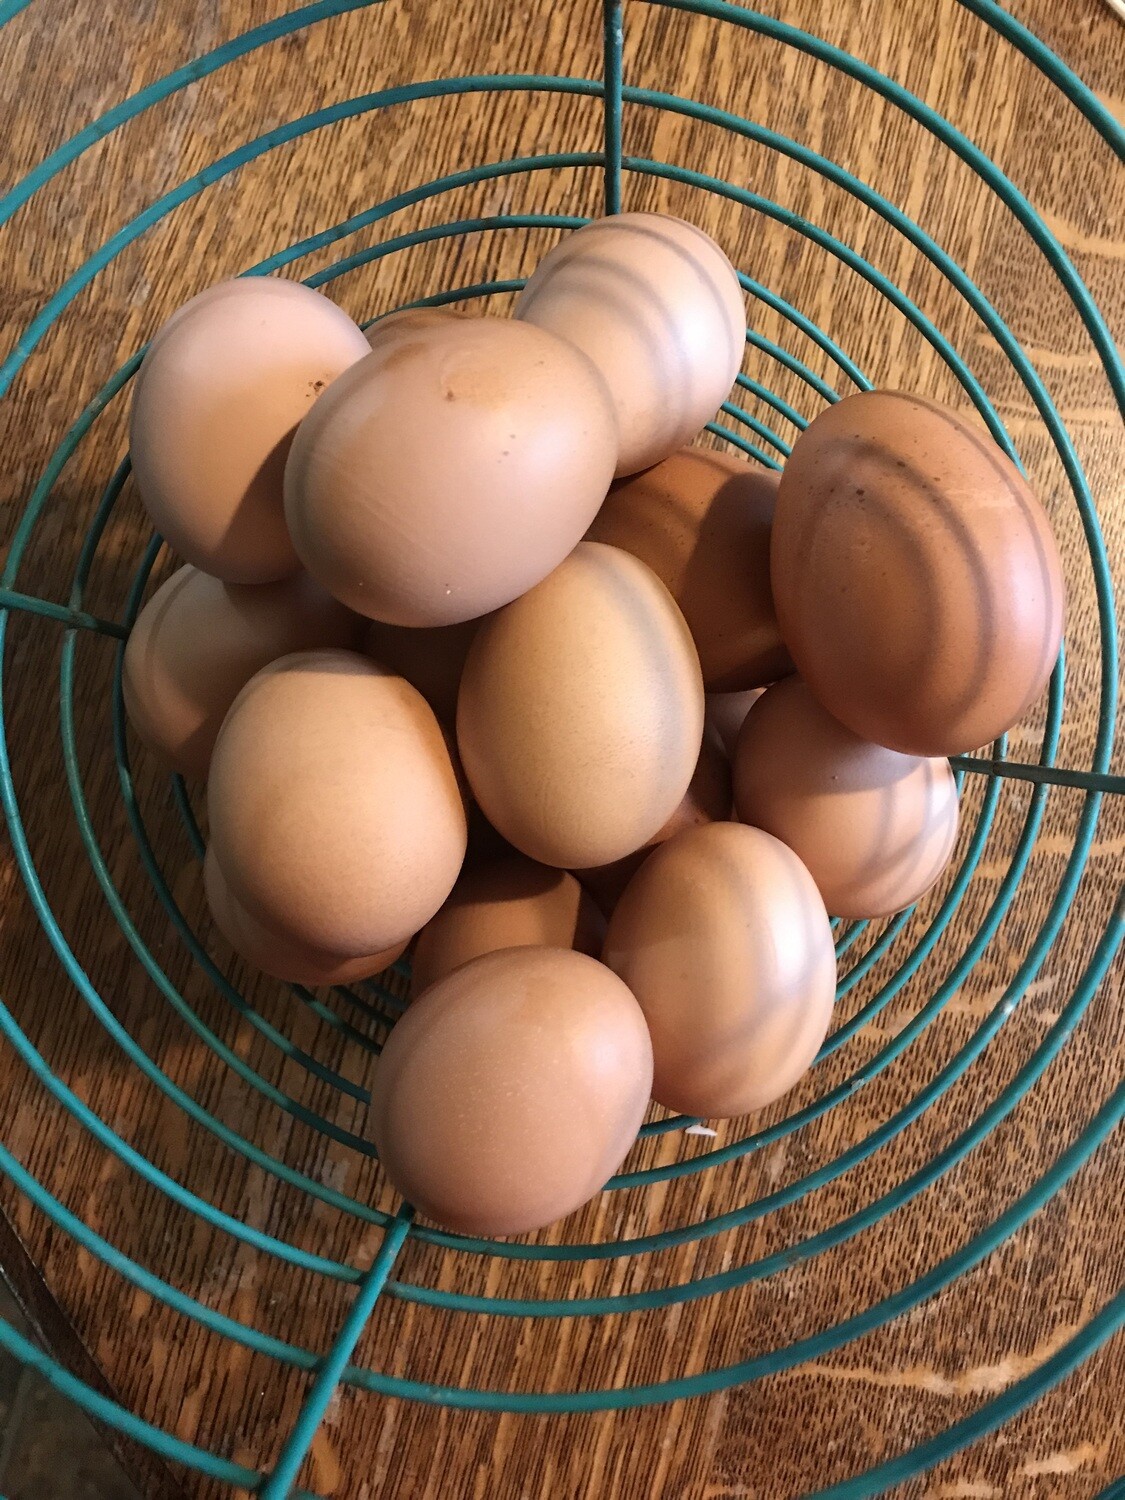 Fresh Free Range eggs